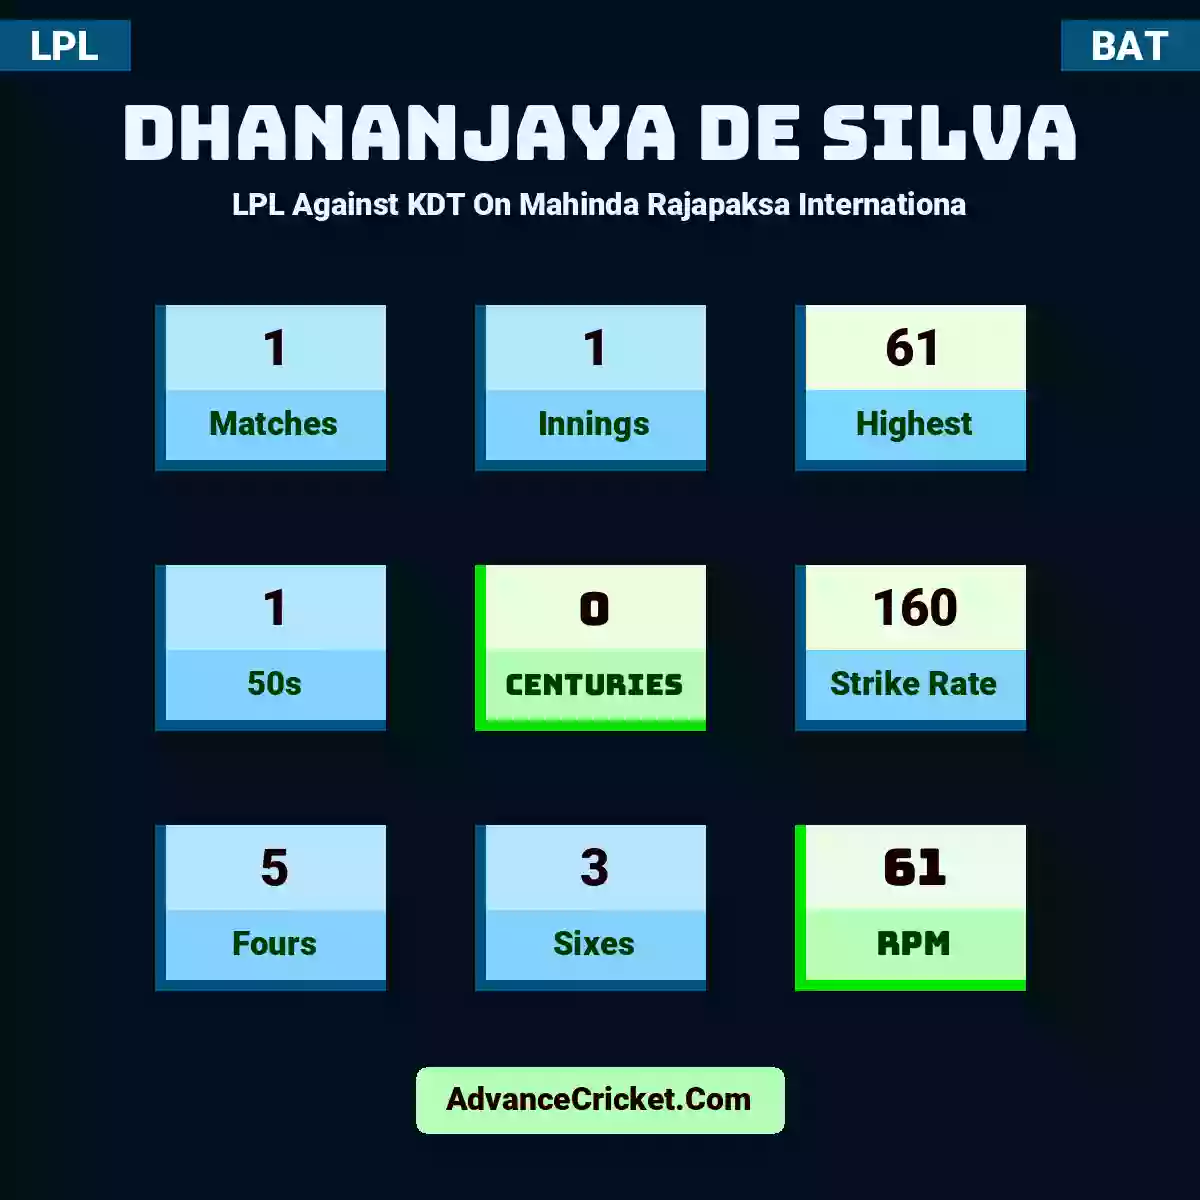 Dhananjaya de Silva LPL  Against KDT On Mahinda Rajapaksa Internationa, Dhananjaya de Silva played 1 matches, scored 61 runs as highest, 1 half-centuries, and 0 centuries, with a strike rate of 160. D.Silva hit 5 fours and 3 sixes, with an RPM of 61.